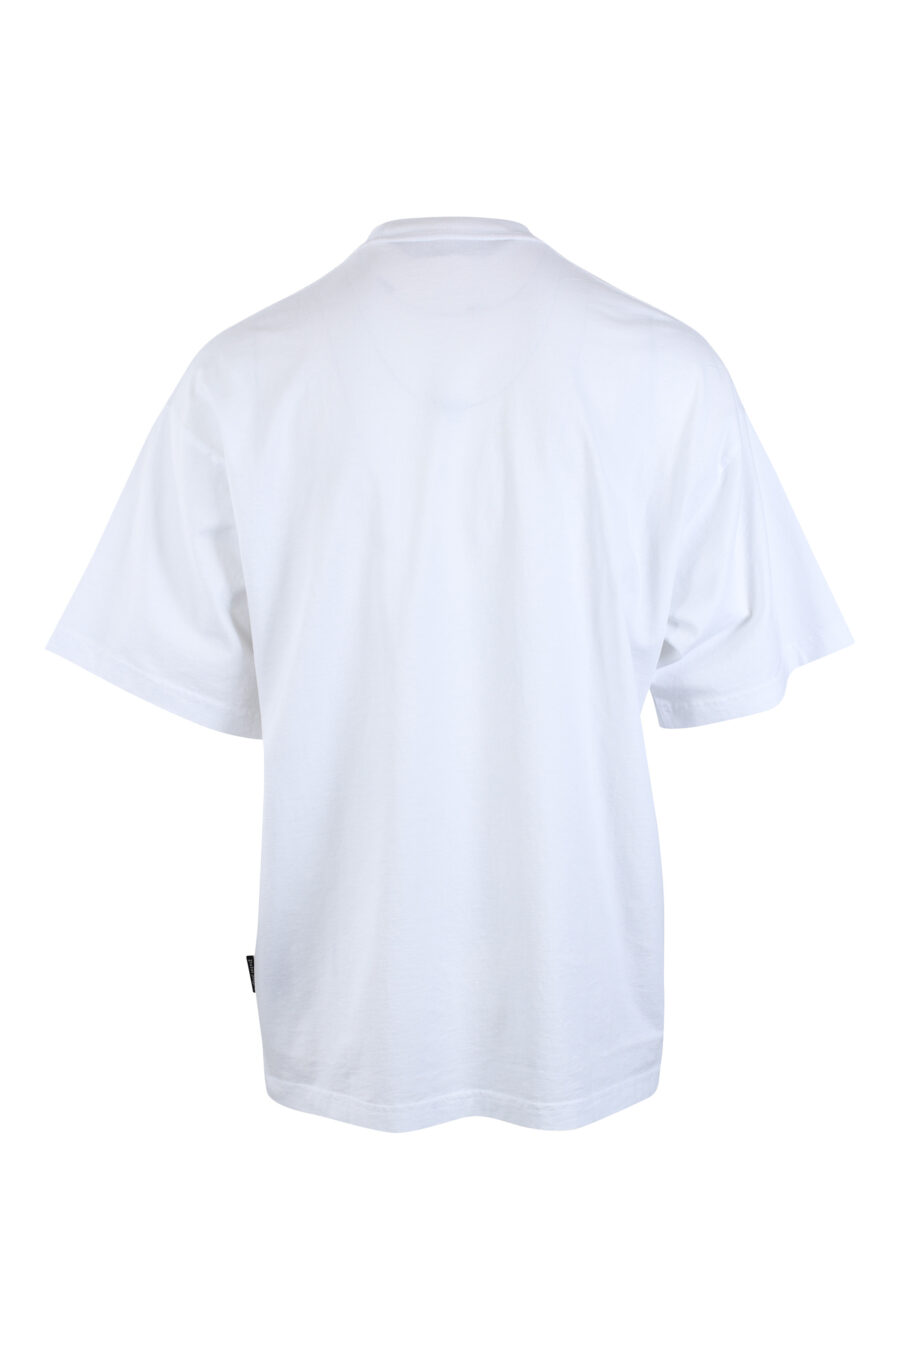 Camiseta blanca con maxilogo "I LOVE PA" con palma multicolor - IMG 2602